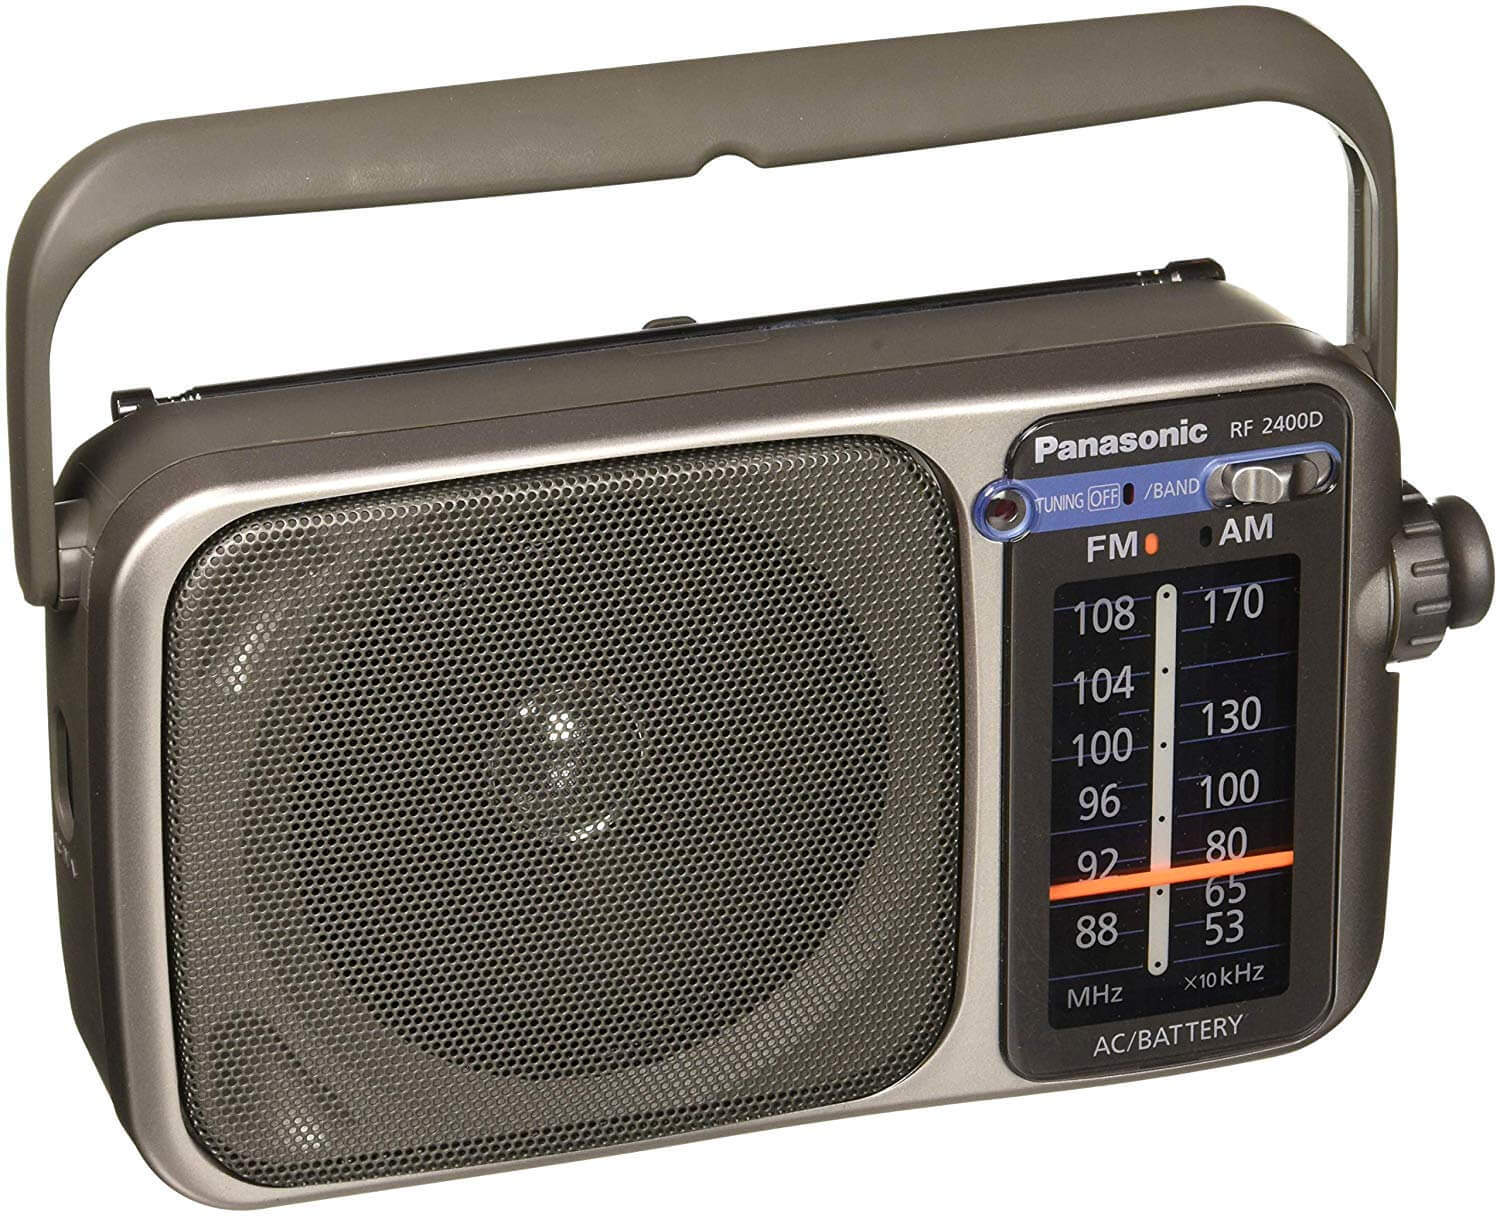 Panasonic RF-2400 AM FM Radio